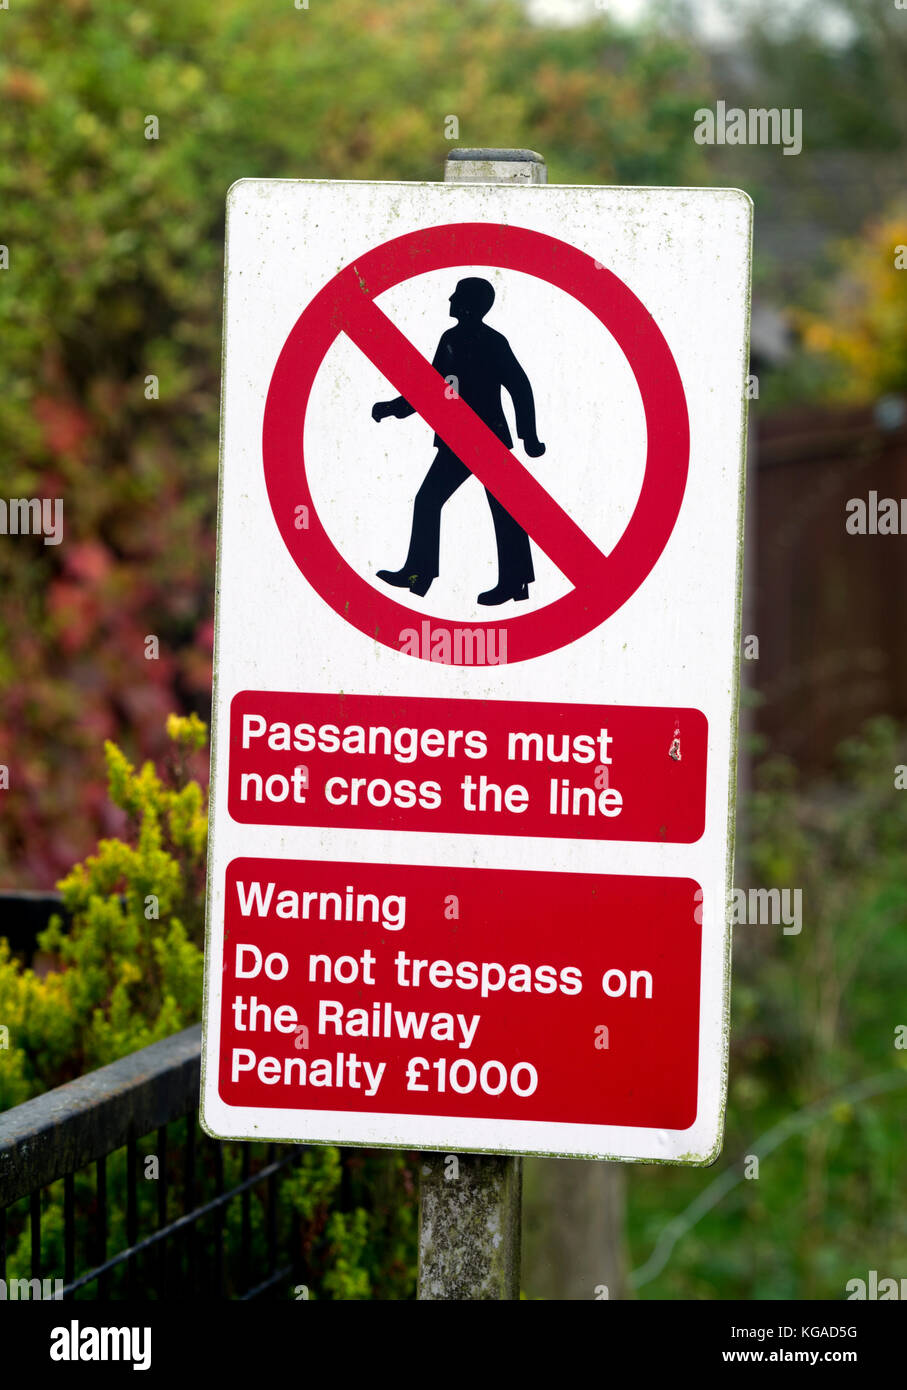 Spelling mistake on railway station sign, 'passangers' instead of 'passengers', Hopton Heath, Shropshire, UK Stock Photo